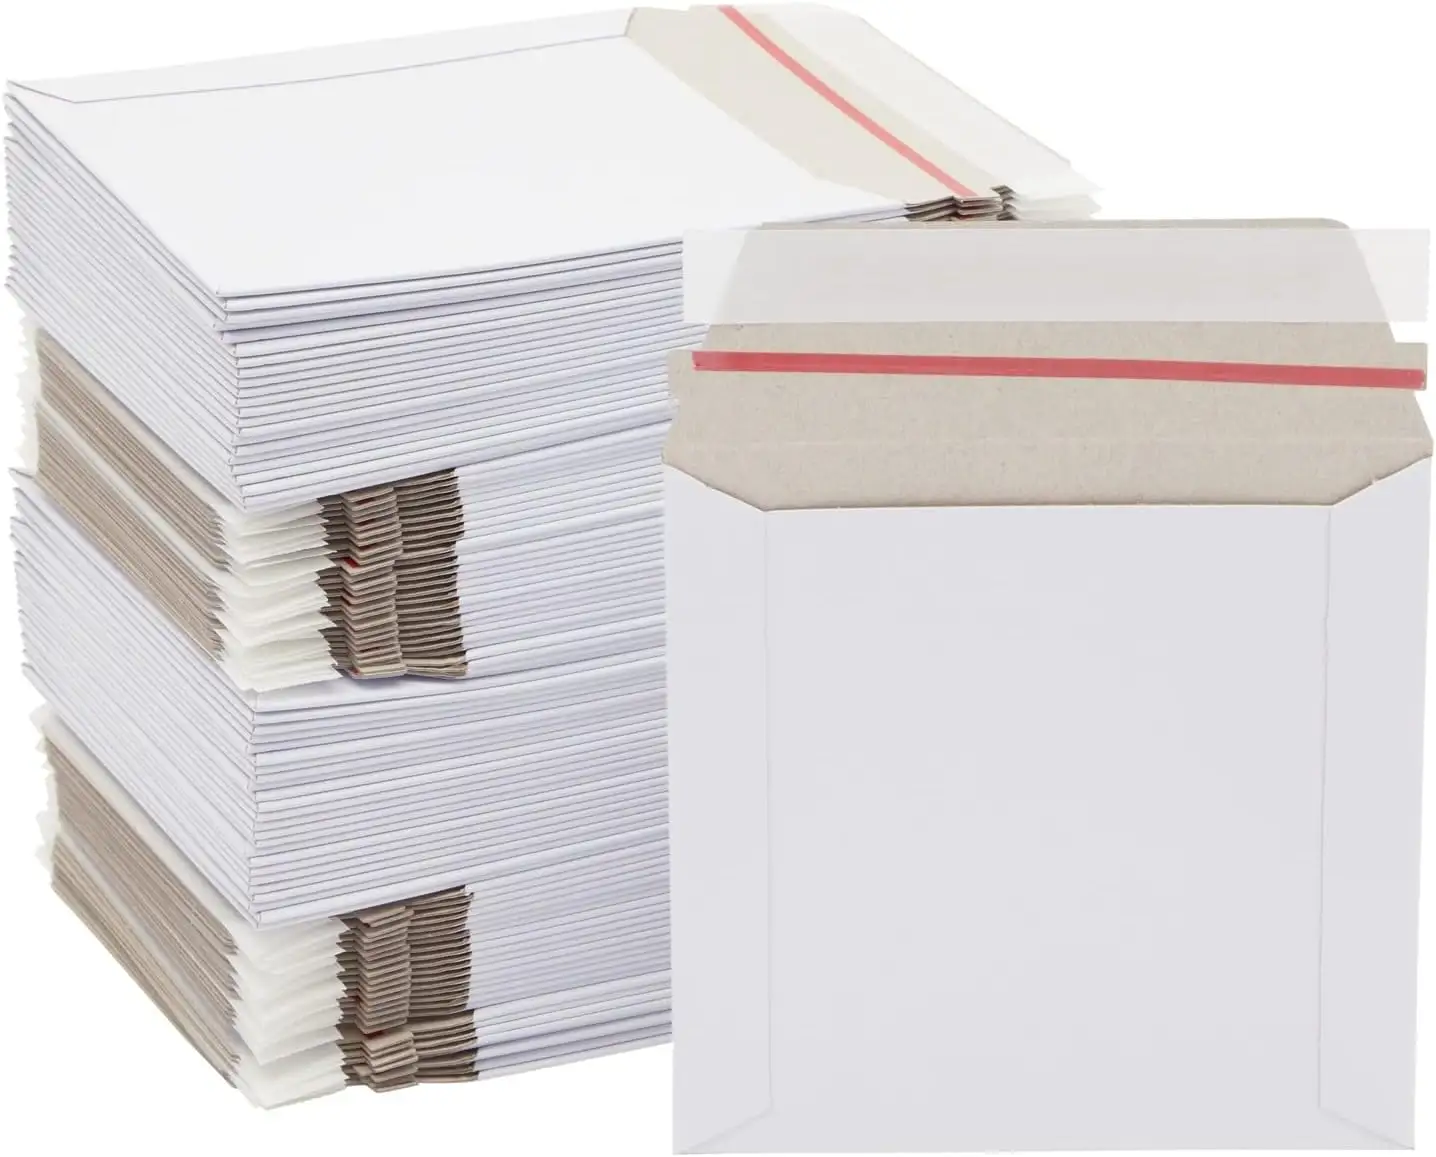 Sobre de correo rígido personalizado sin doblar, sobre blanco de cartón con solapa autosellante